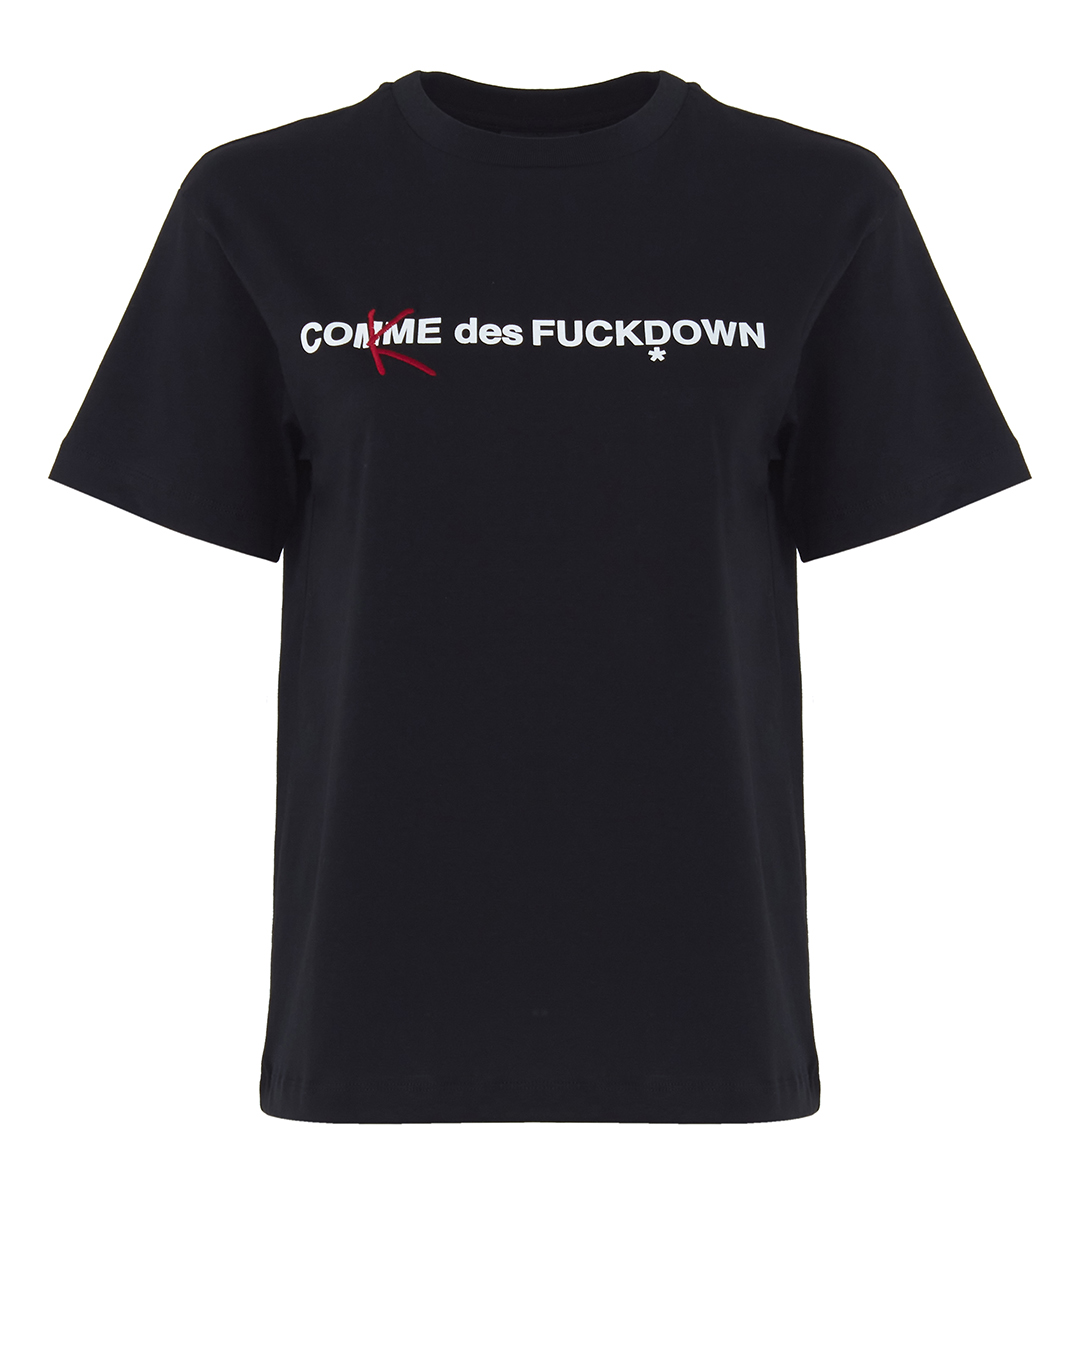 COMME des FUCKDOWN с принтом на спине  артикул  марки COMME des FUCKDOWN купить за 6100 руб.